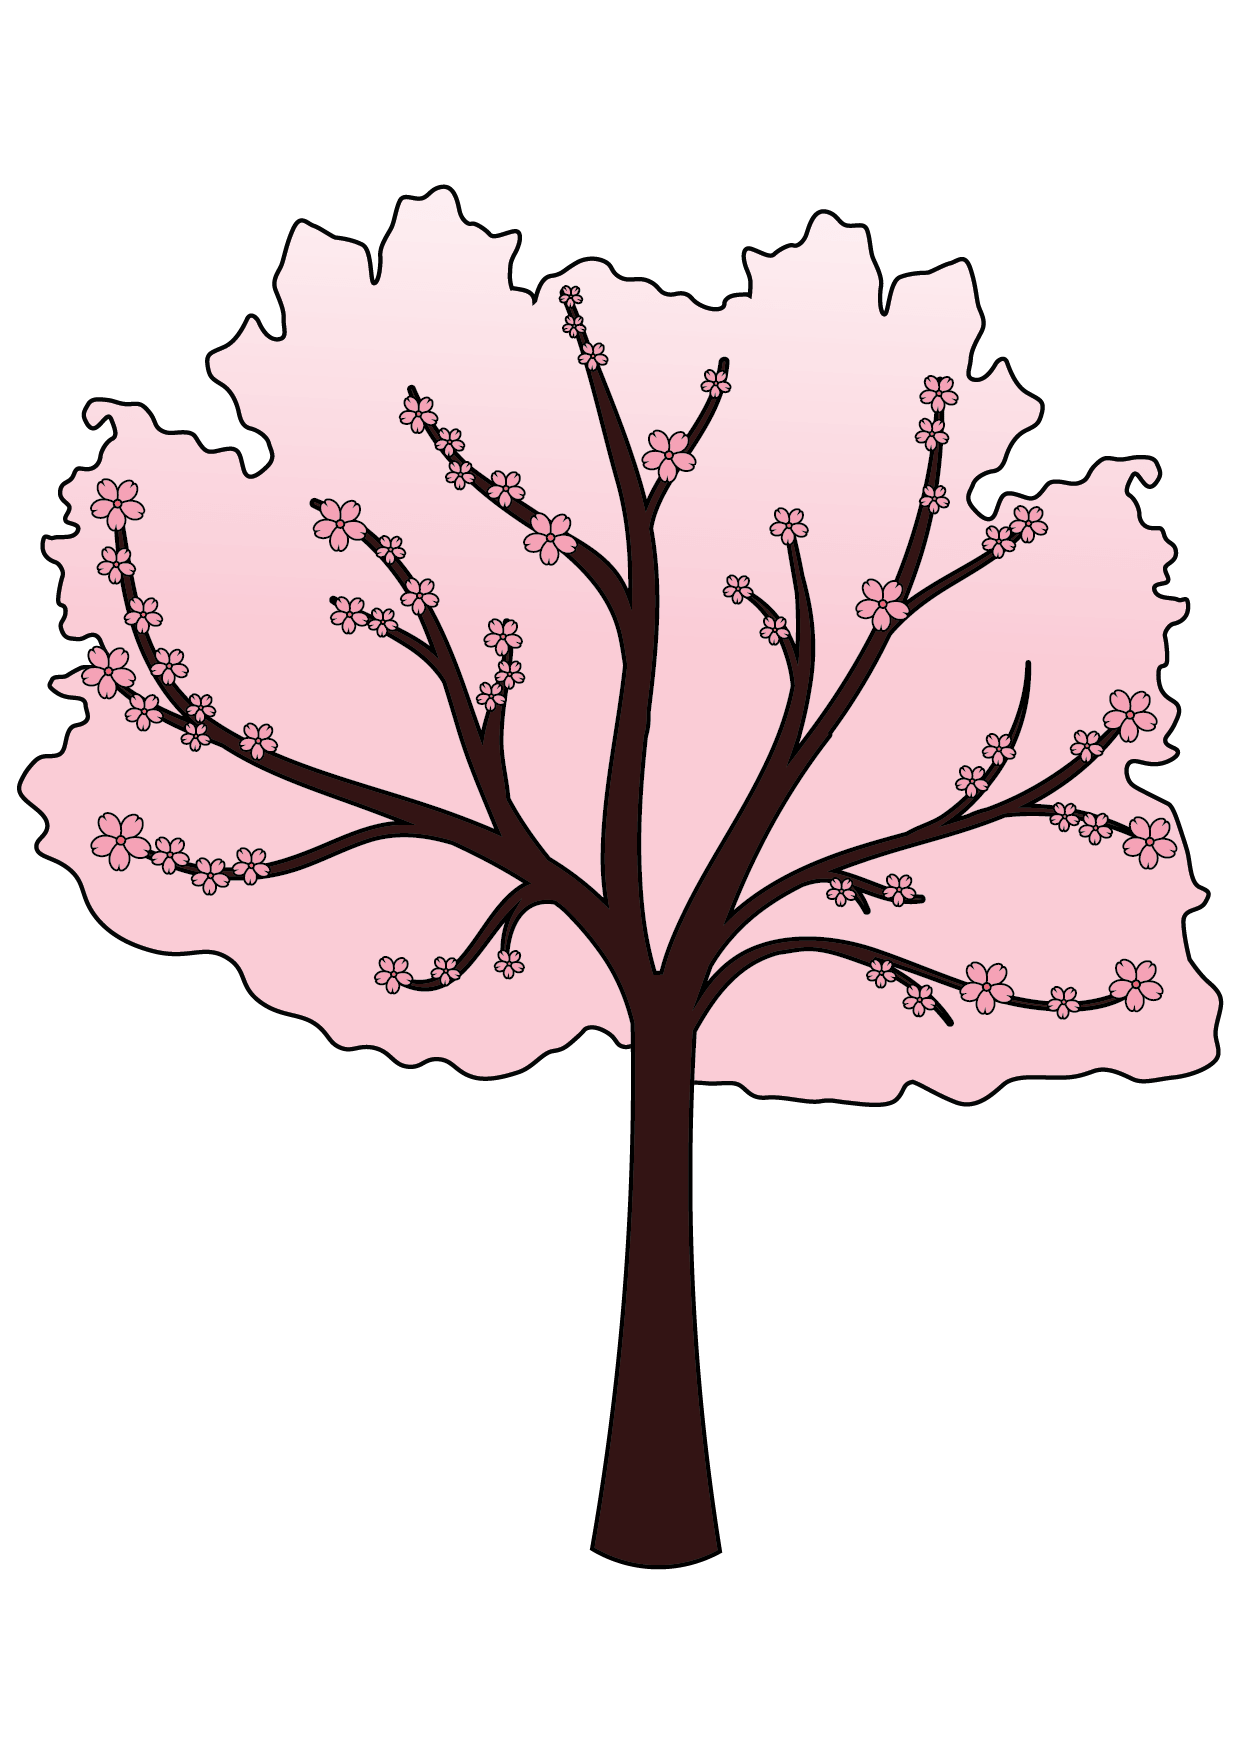 How to Draw A Cherry Blossom Tree Step by Step Printable